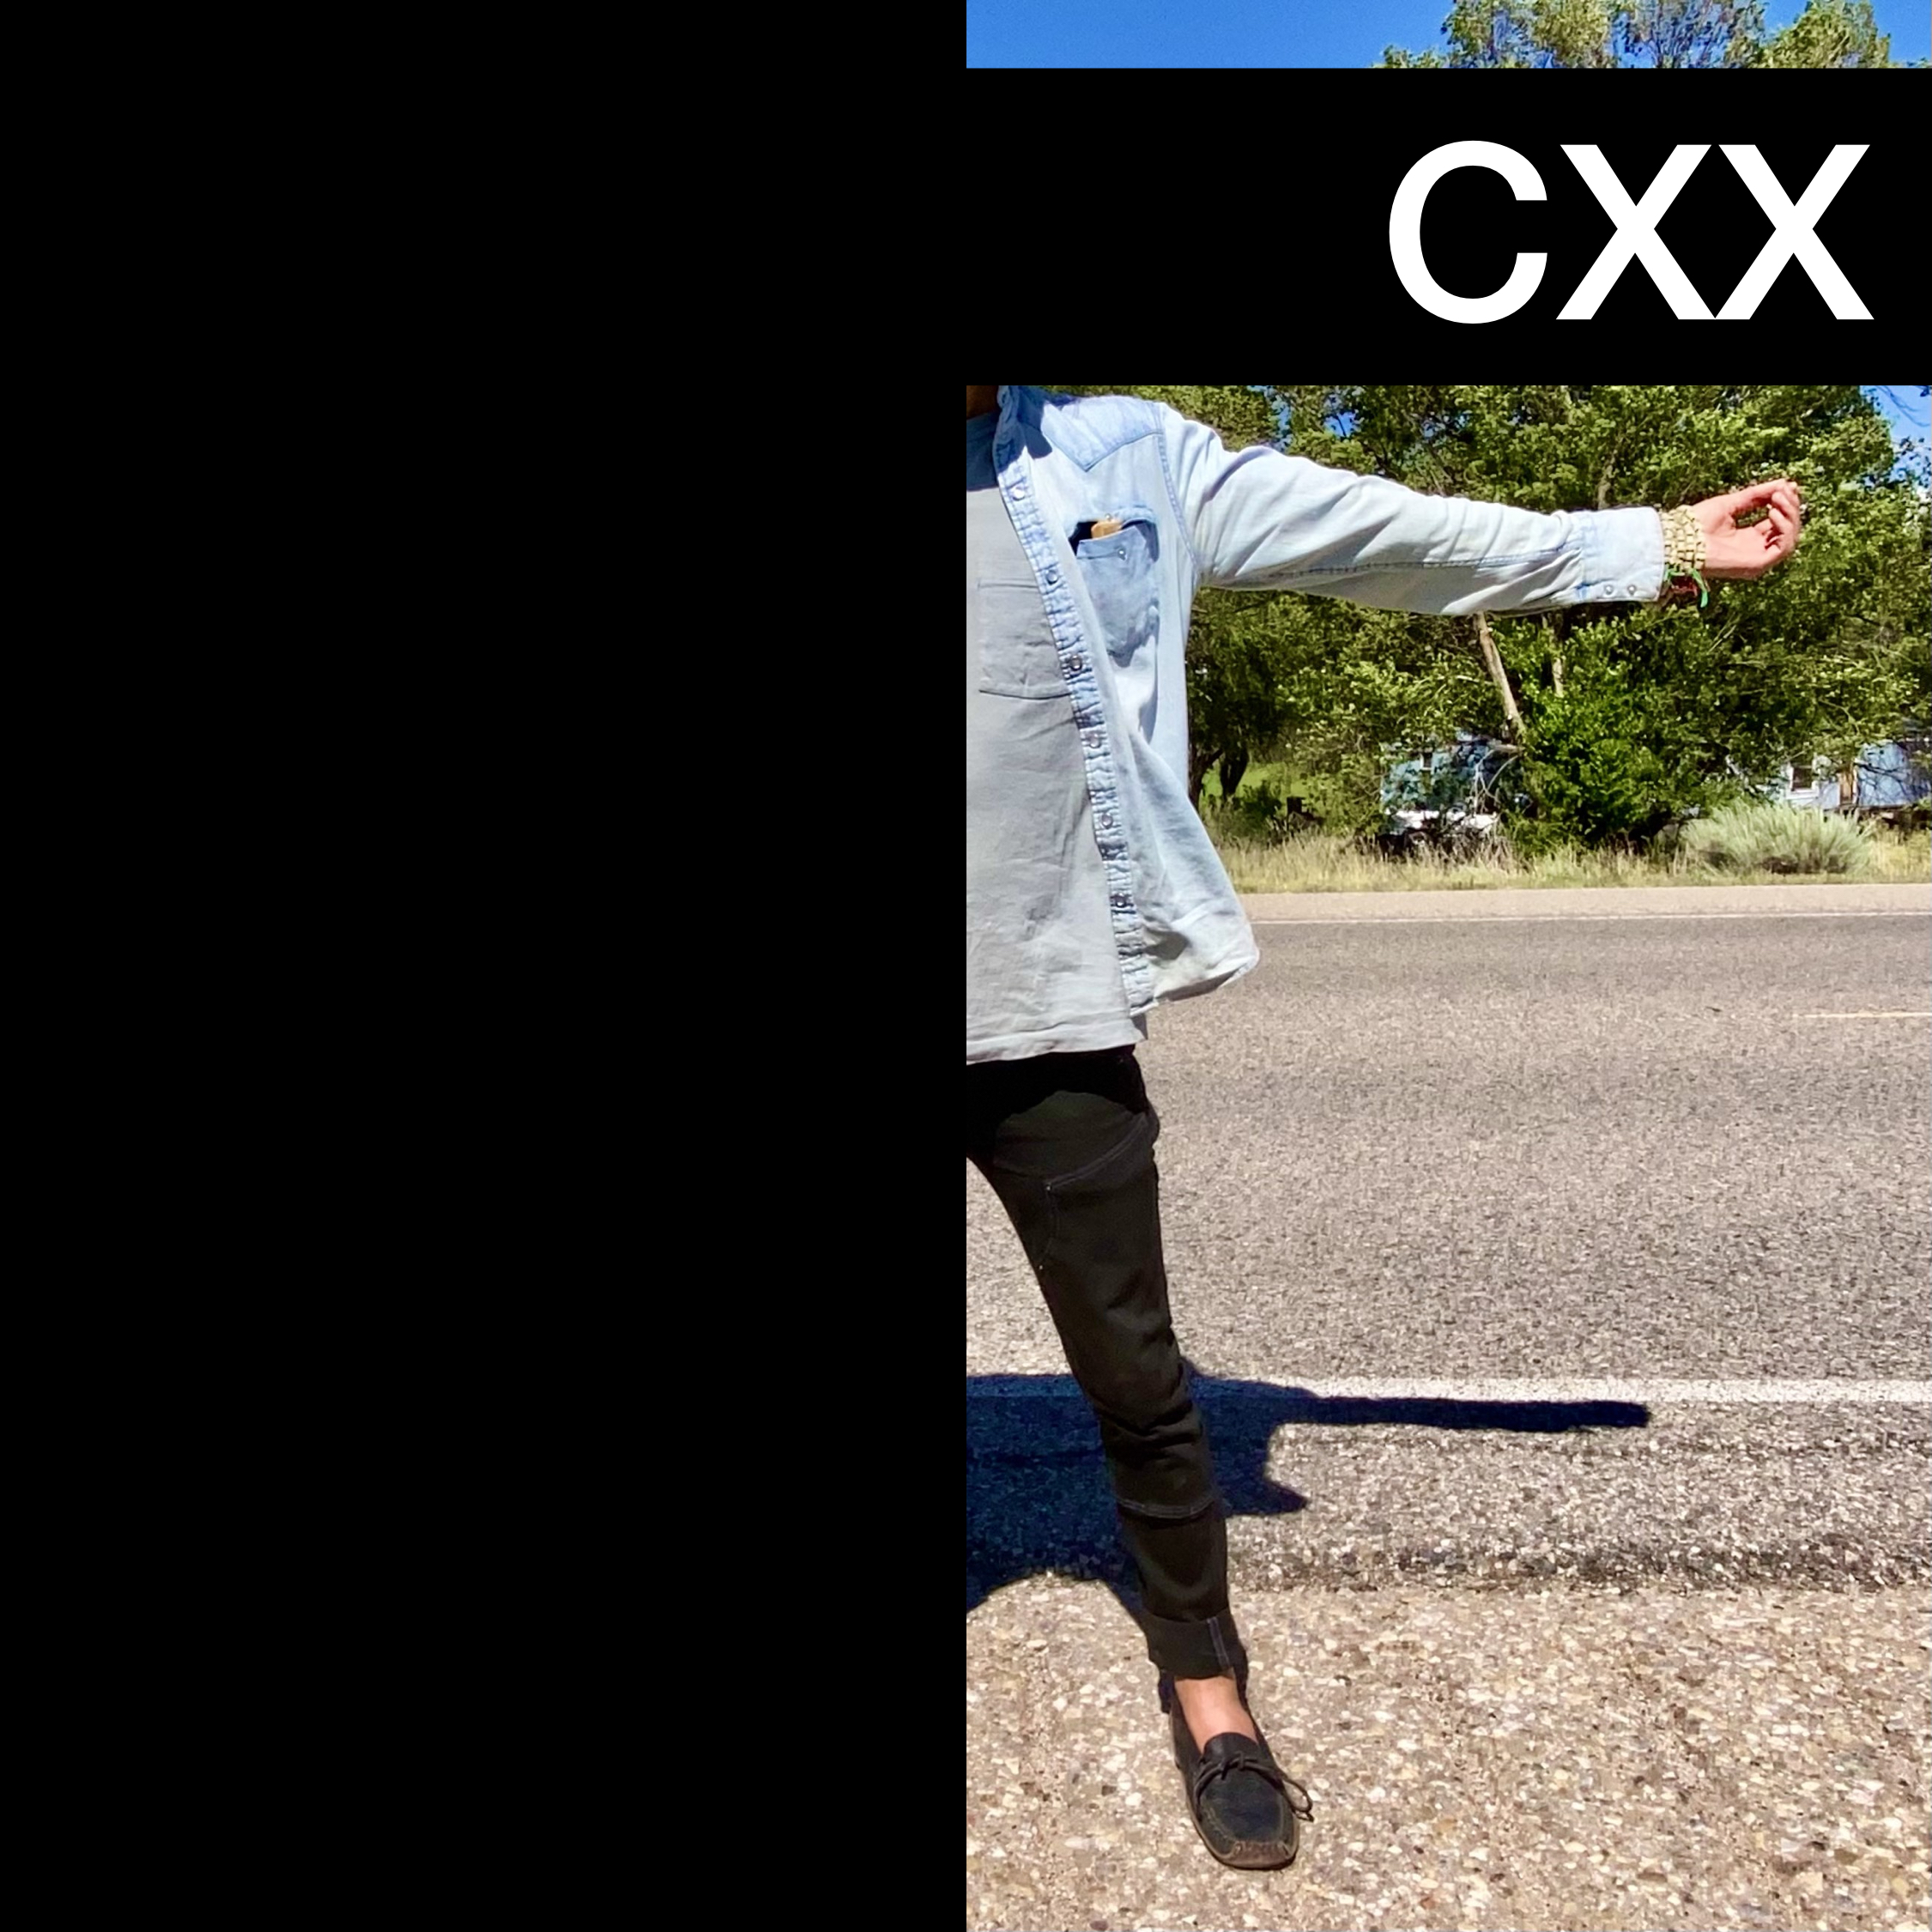 #CXX